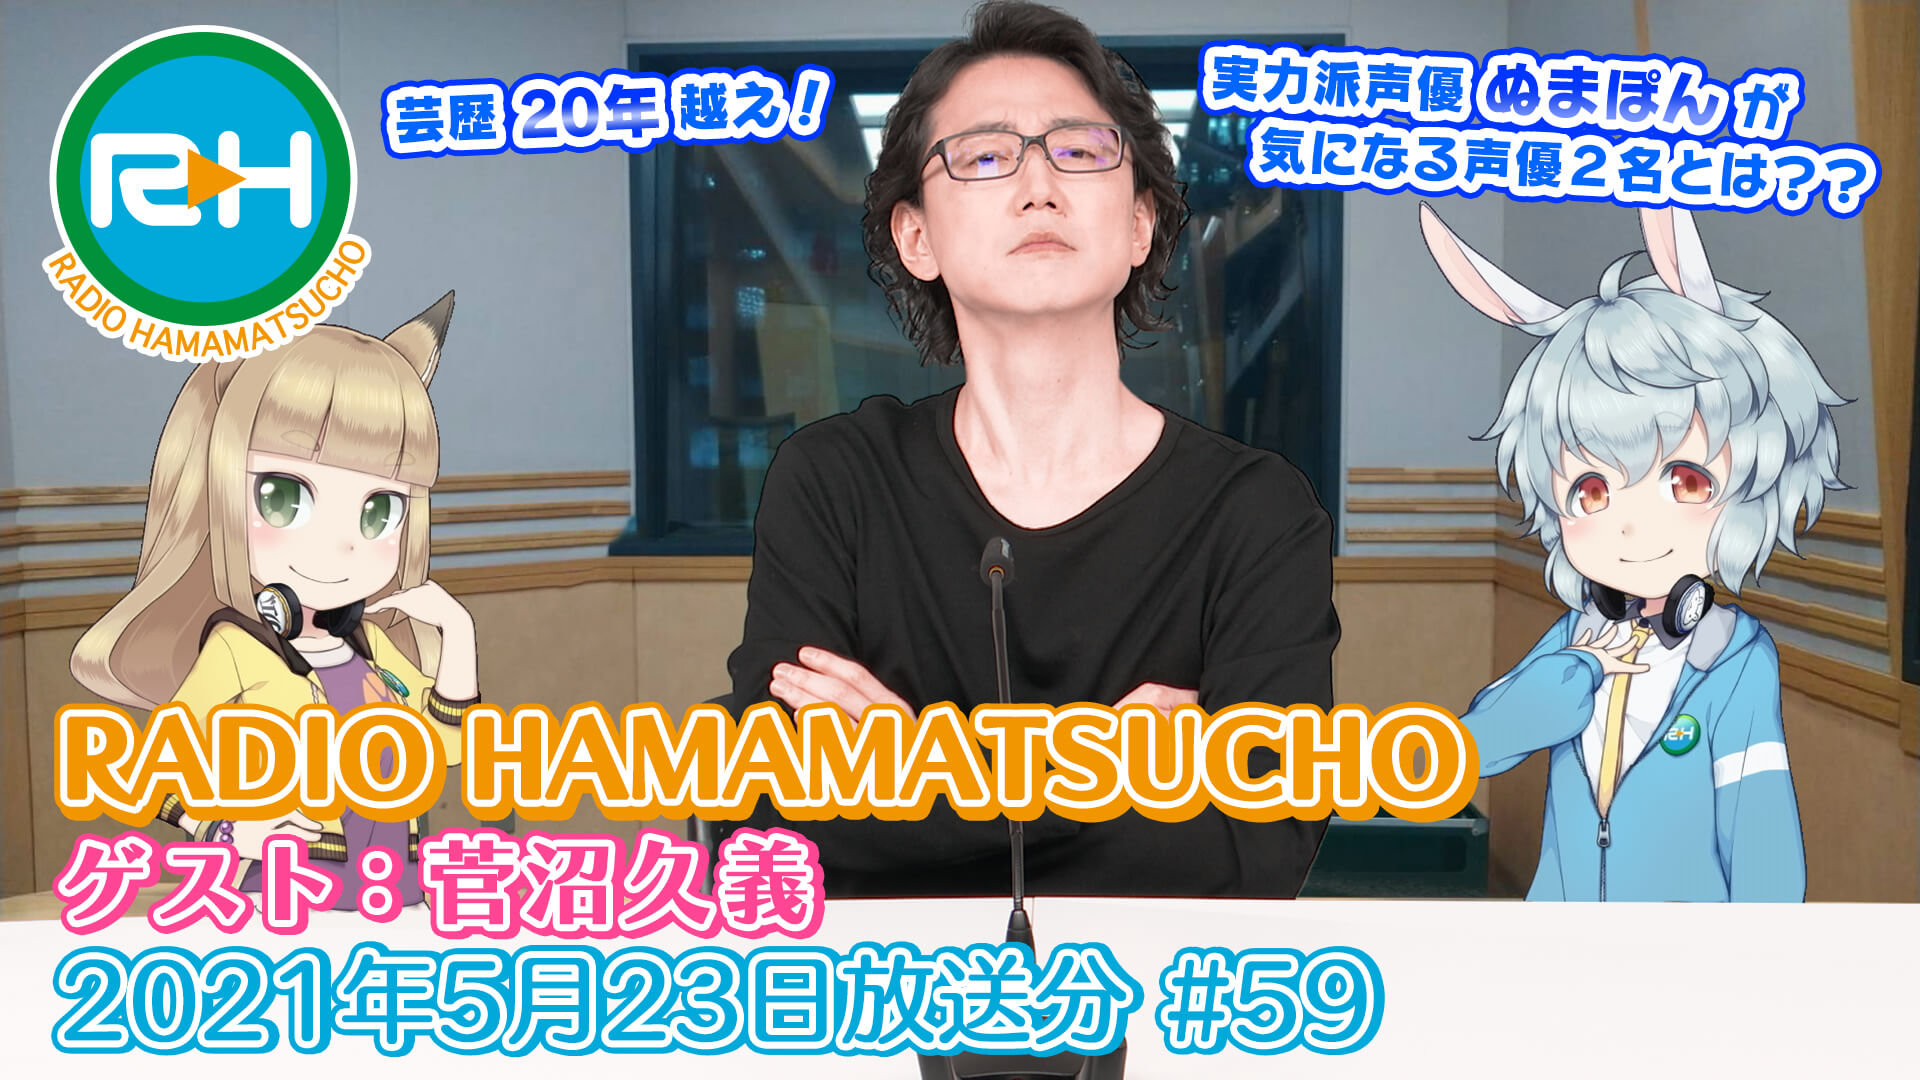 RADIO HAMAMATSUCHO 第59回 (2021年5月23日放送分) ゲスト: 菅沼久義